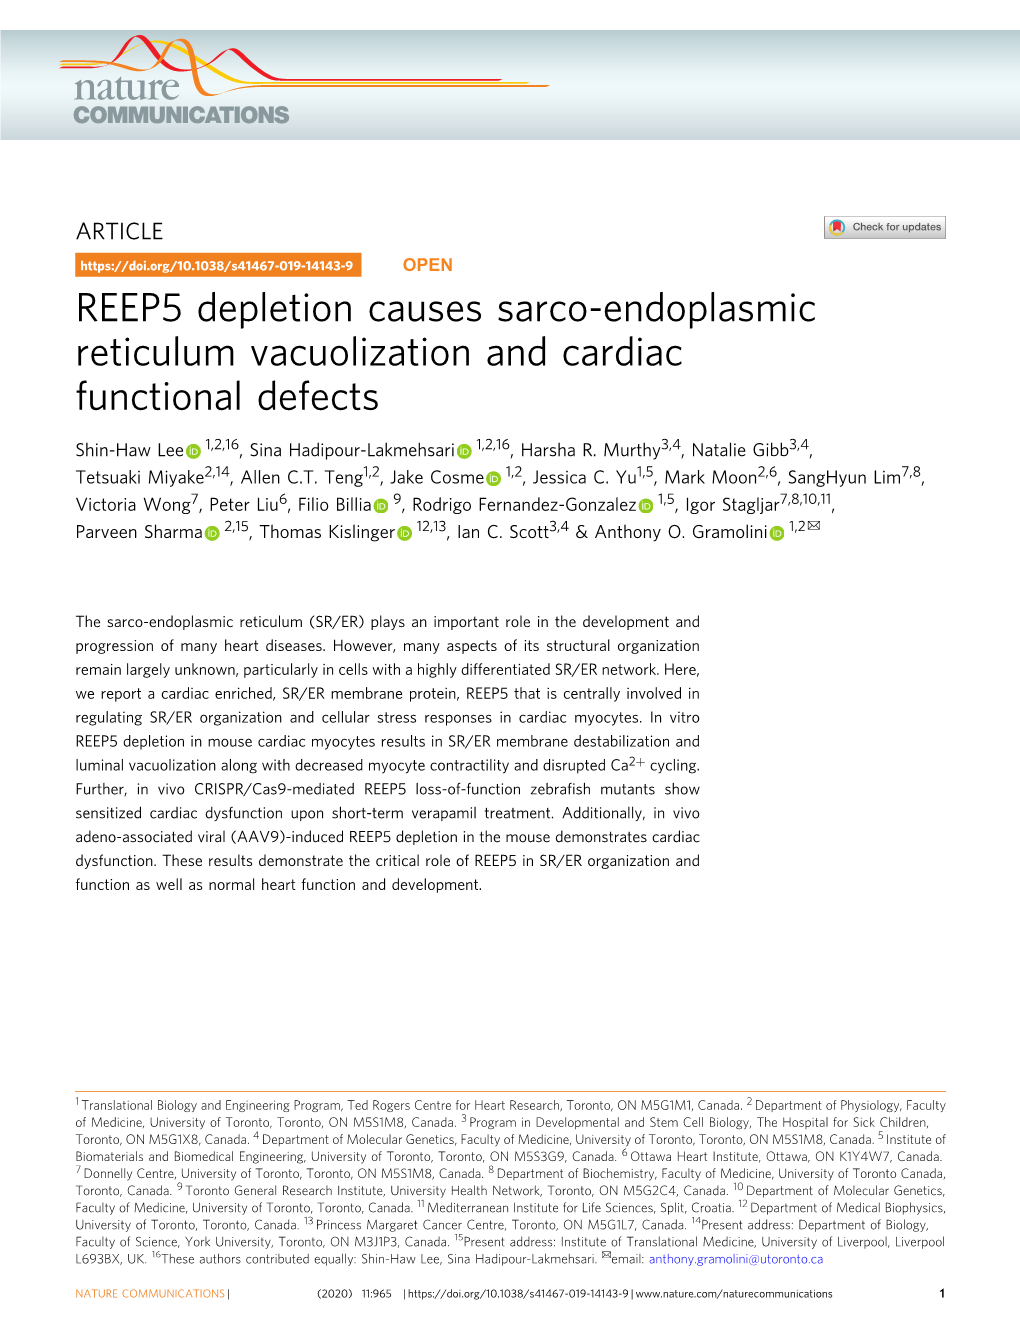 REEP5 Depletion Causes Sarco-Endoplasmic Reticulum Vacuolization and Cardiac Functional Defects